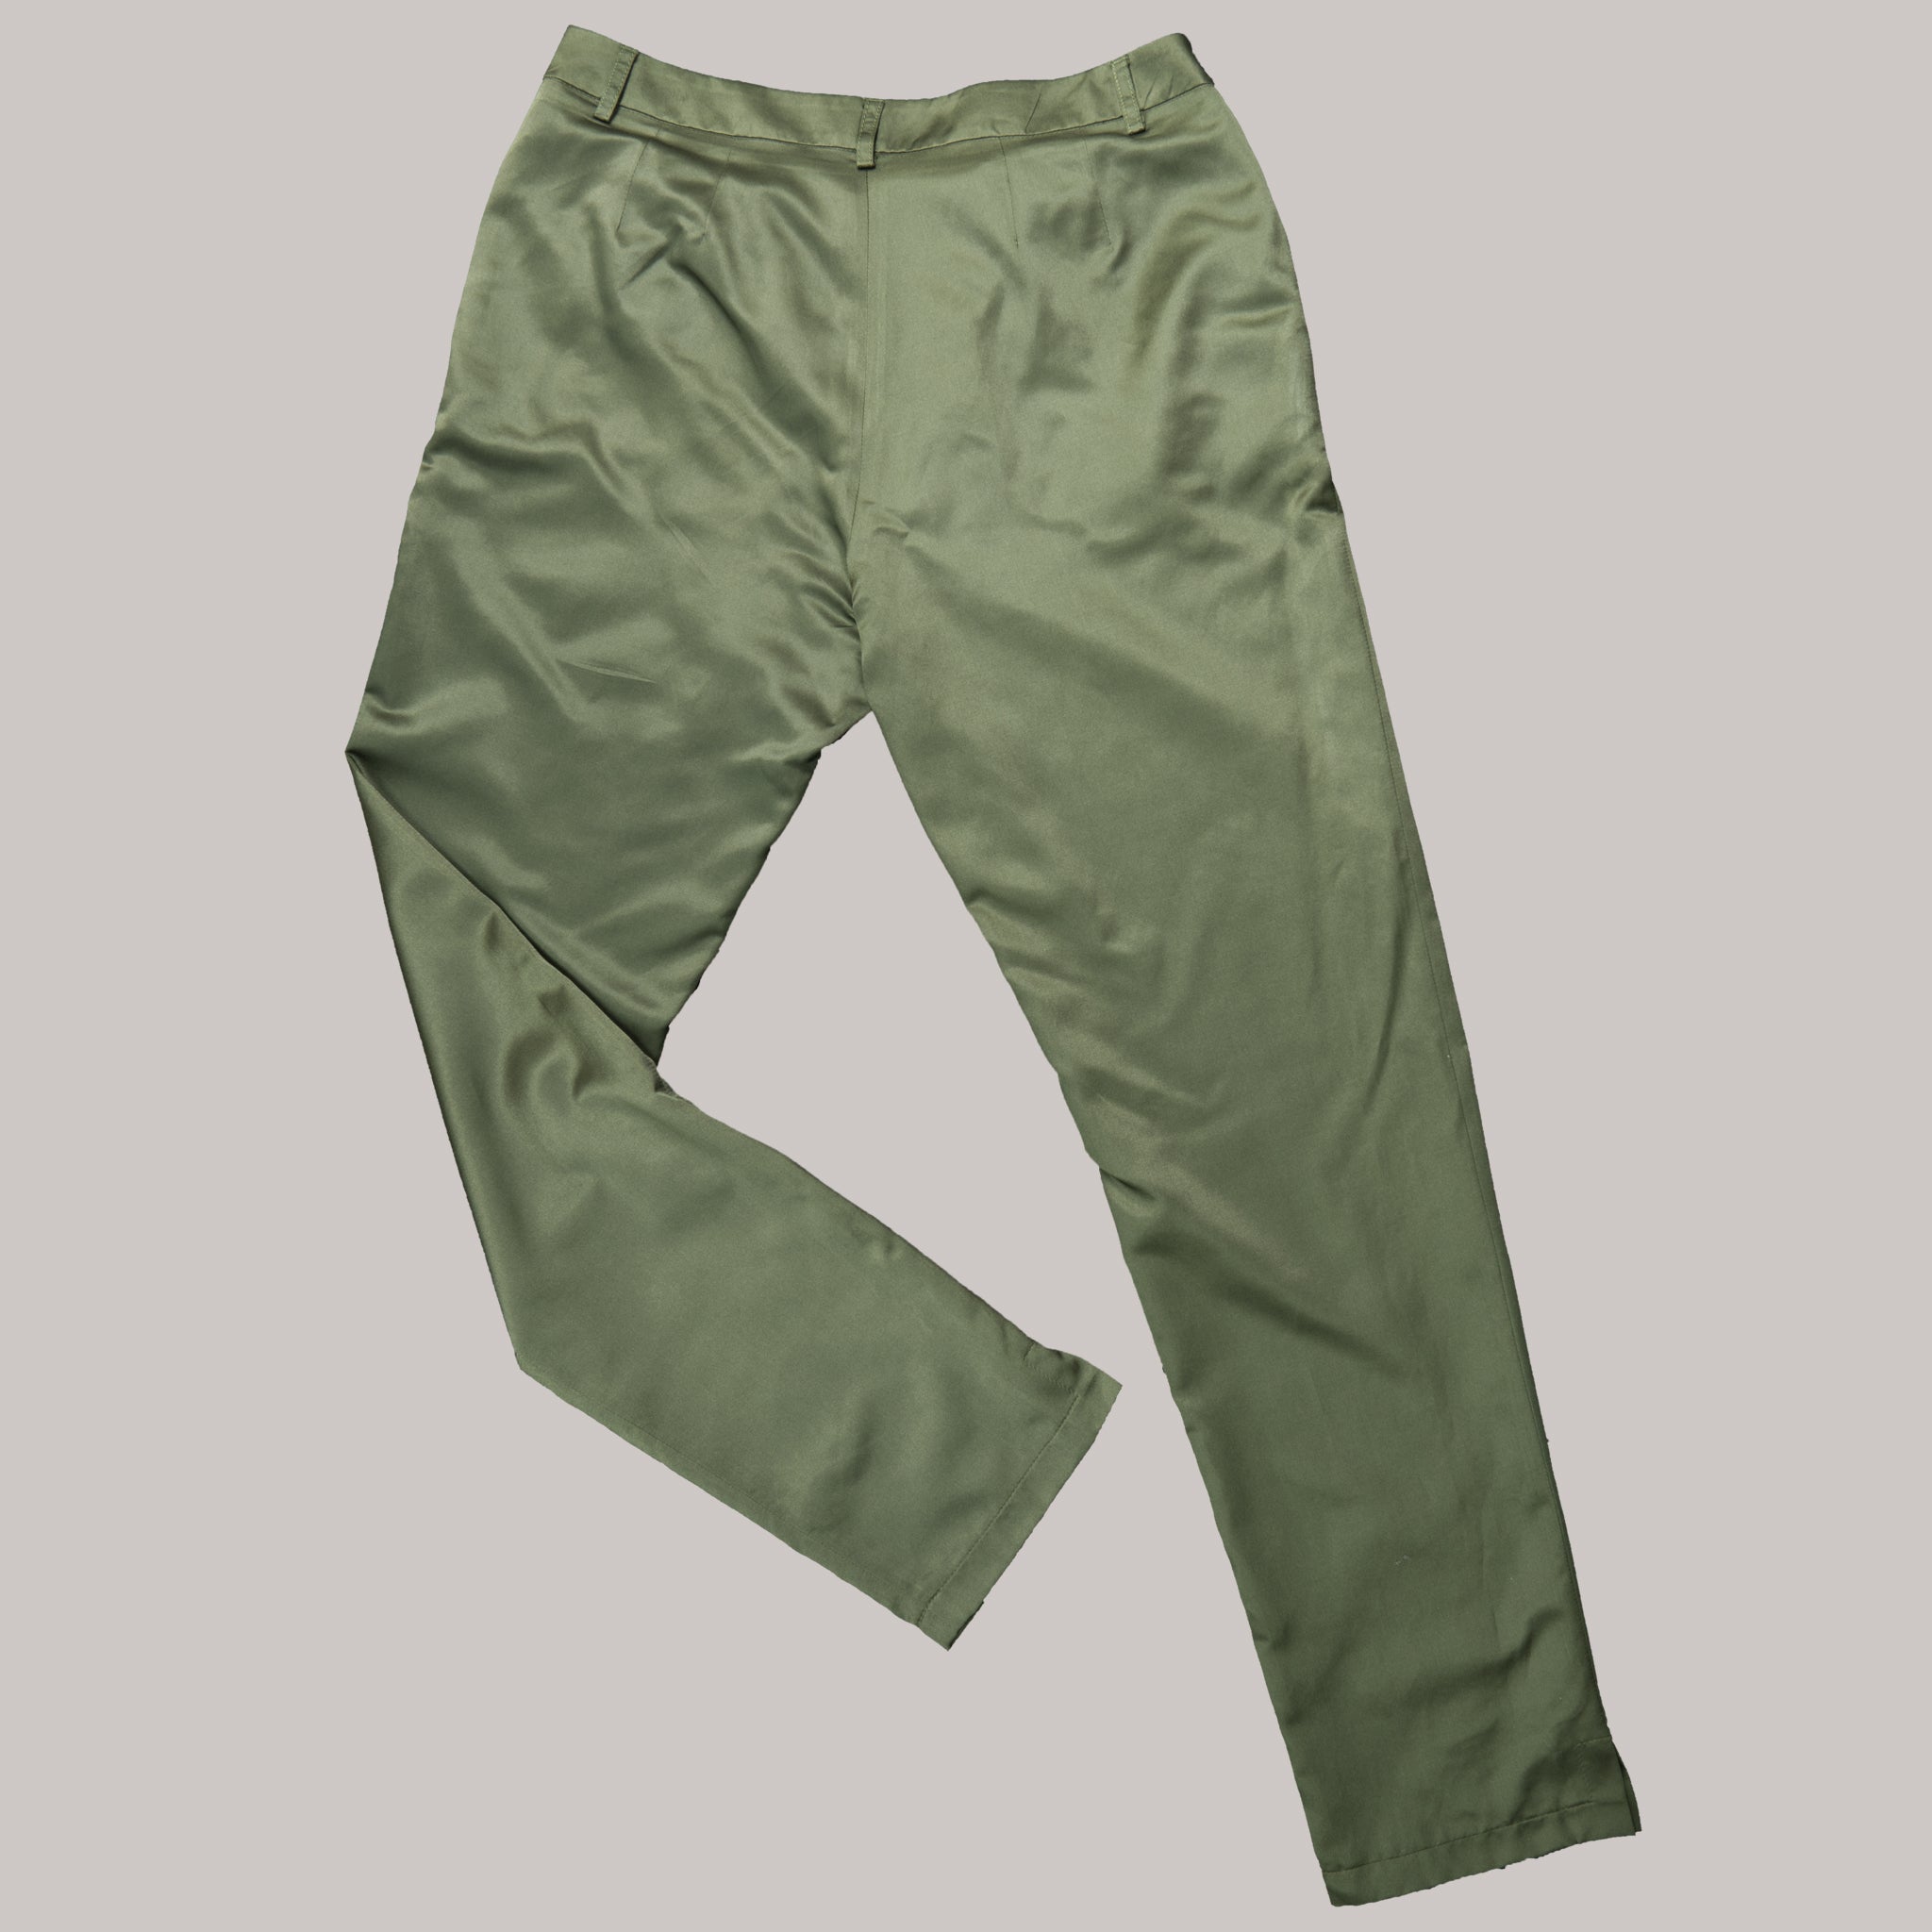 Pantaloni verzi / Green trousers